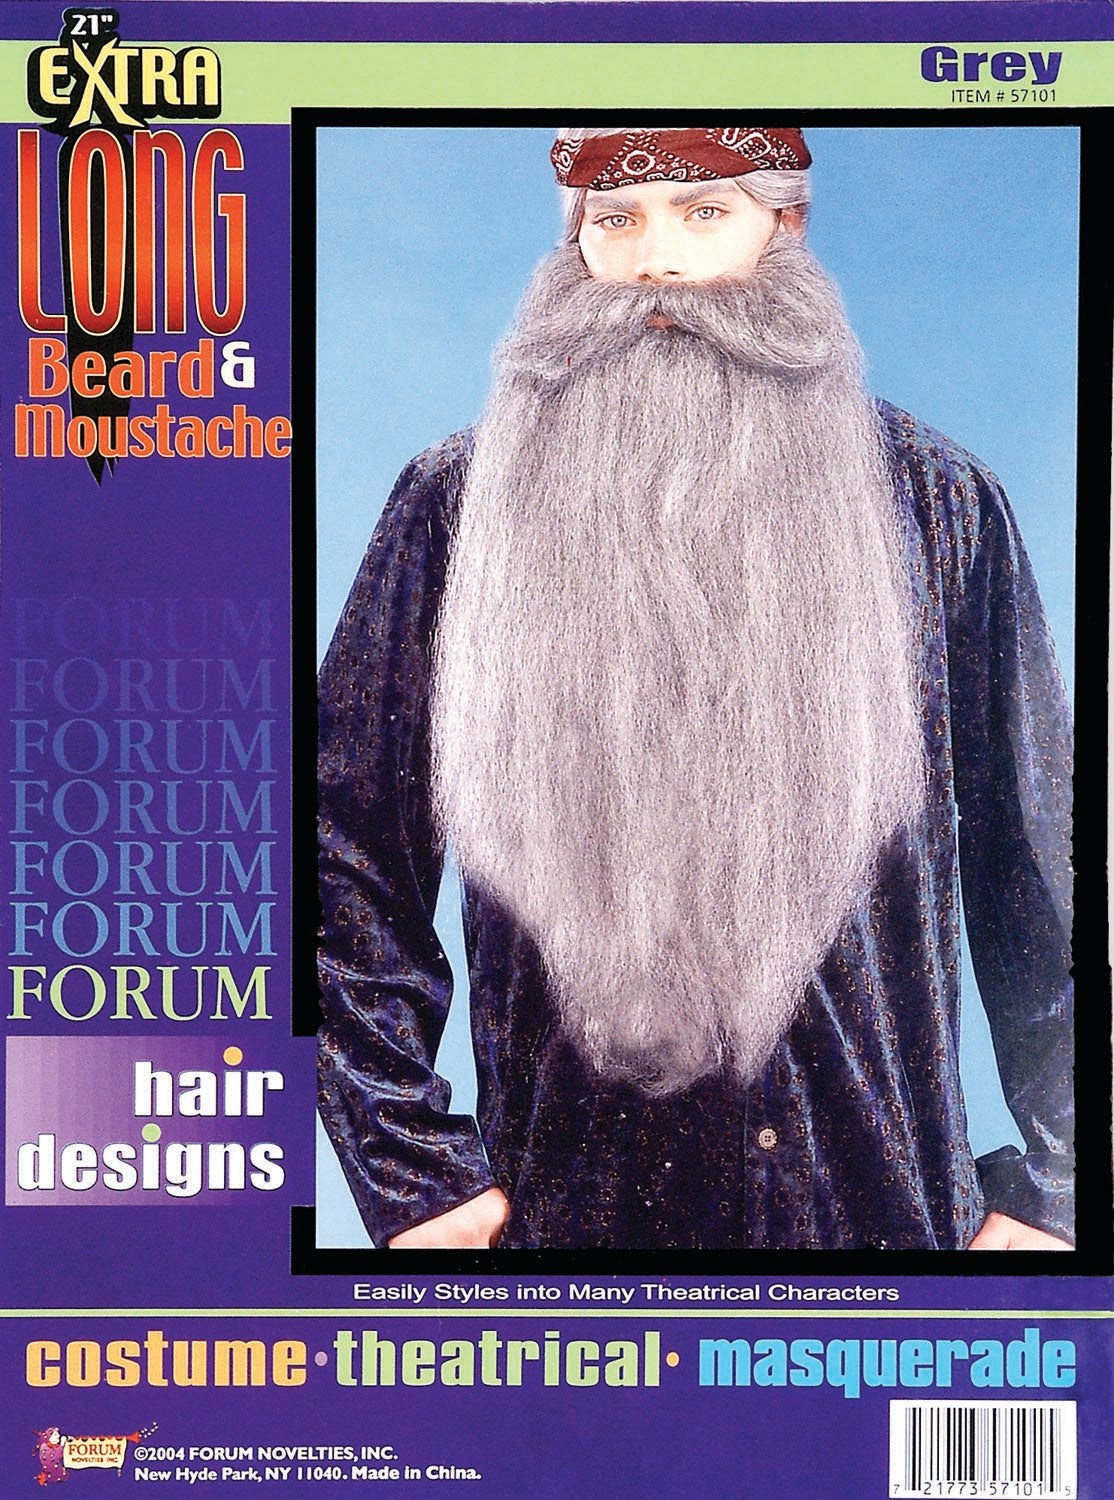 18” Extra Long Beard/Mustache